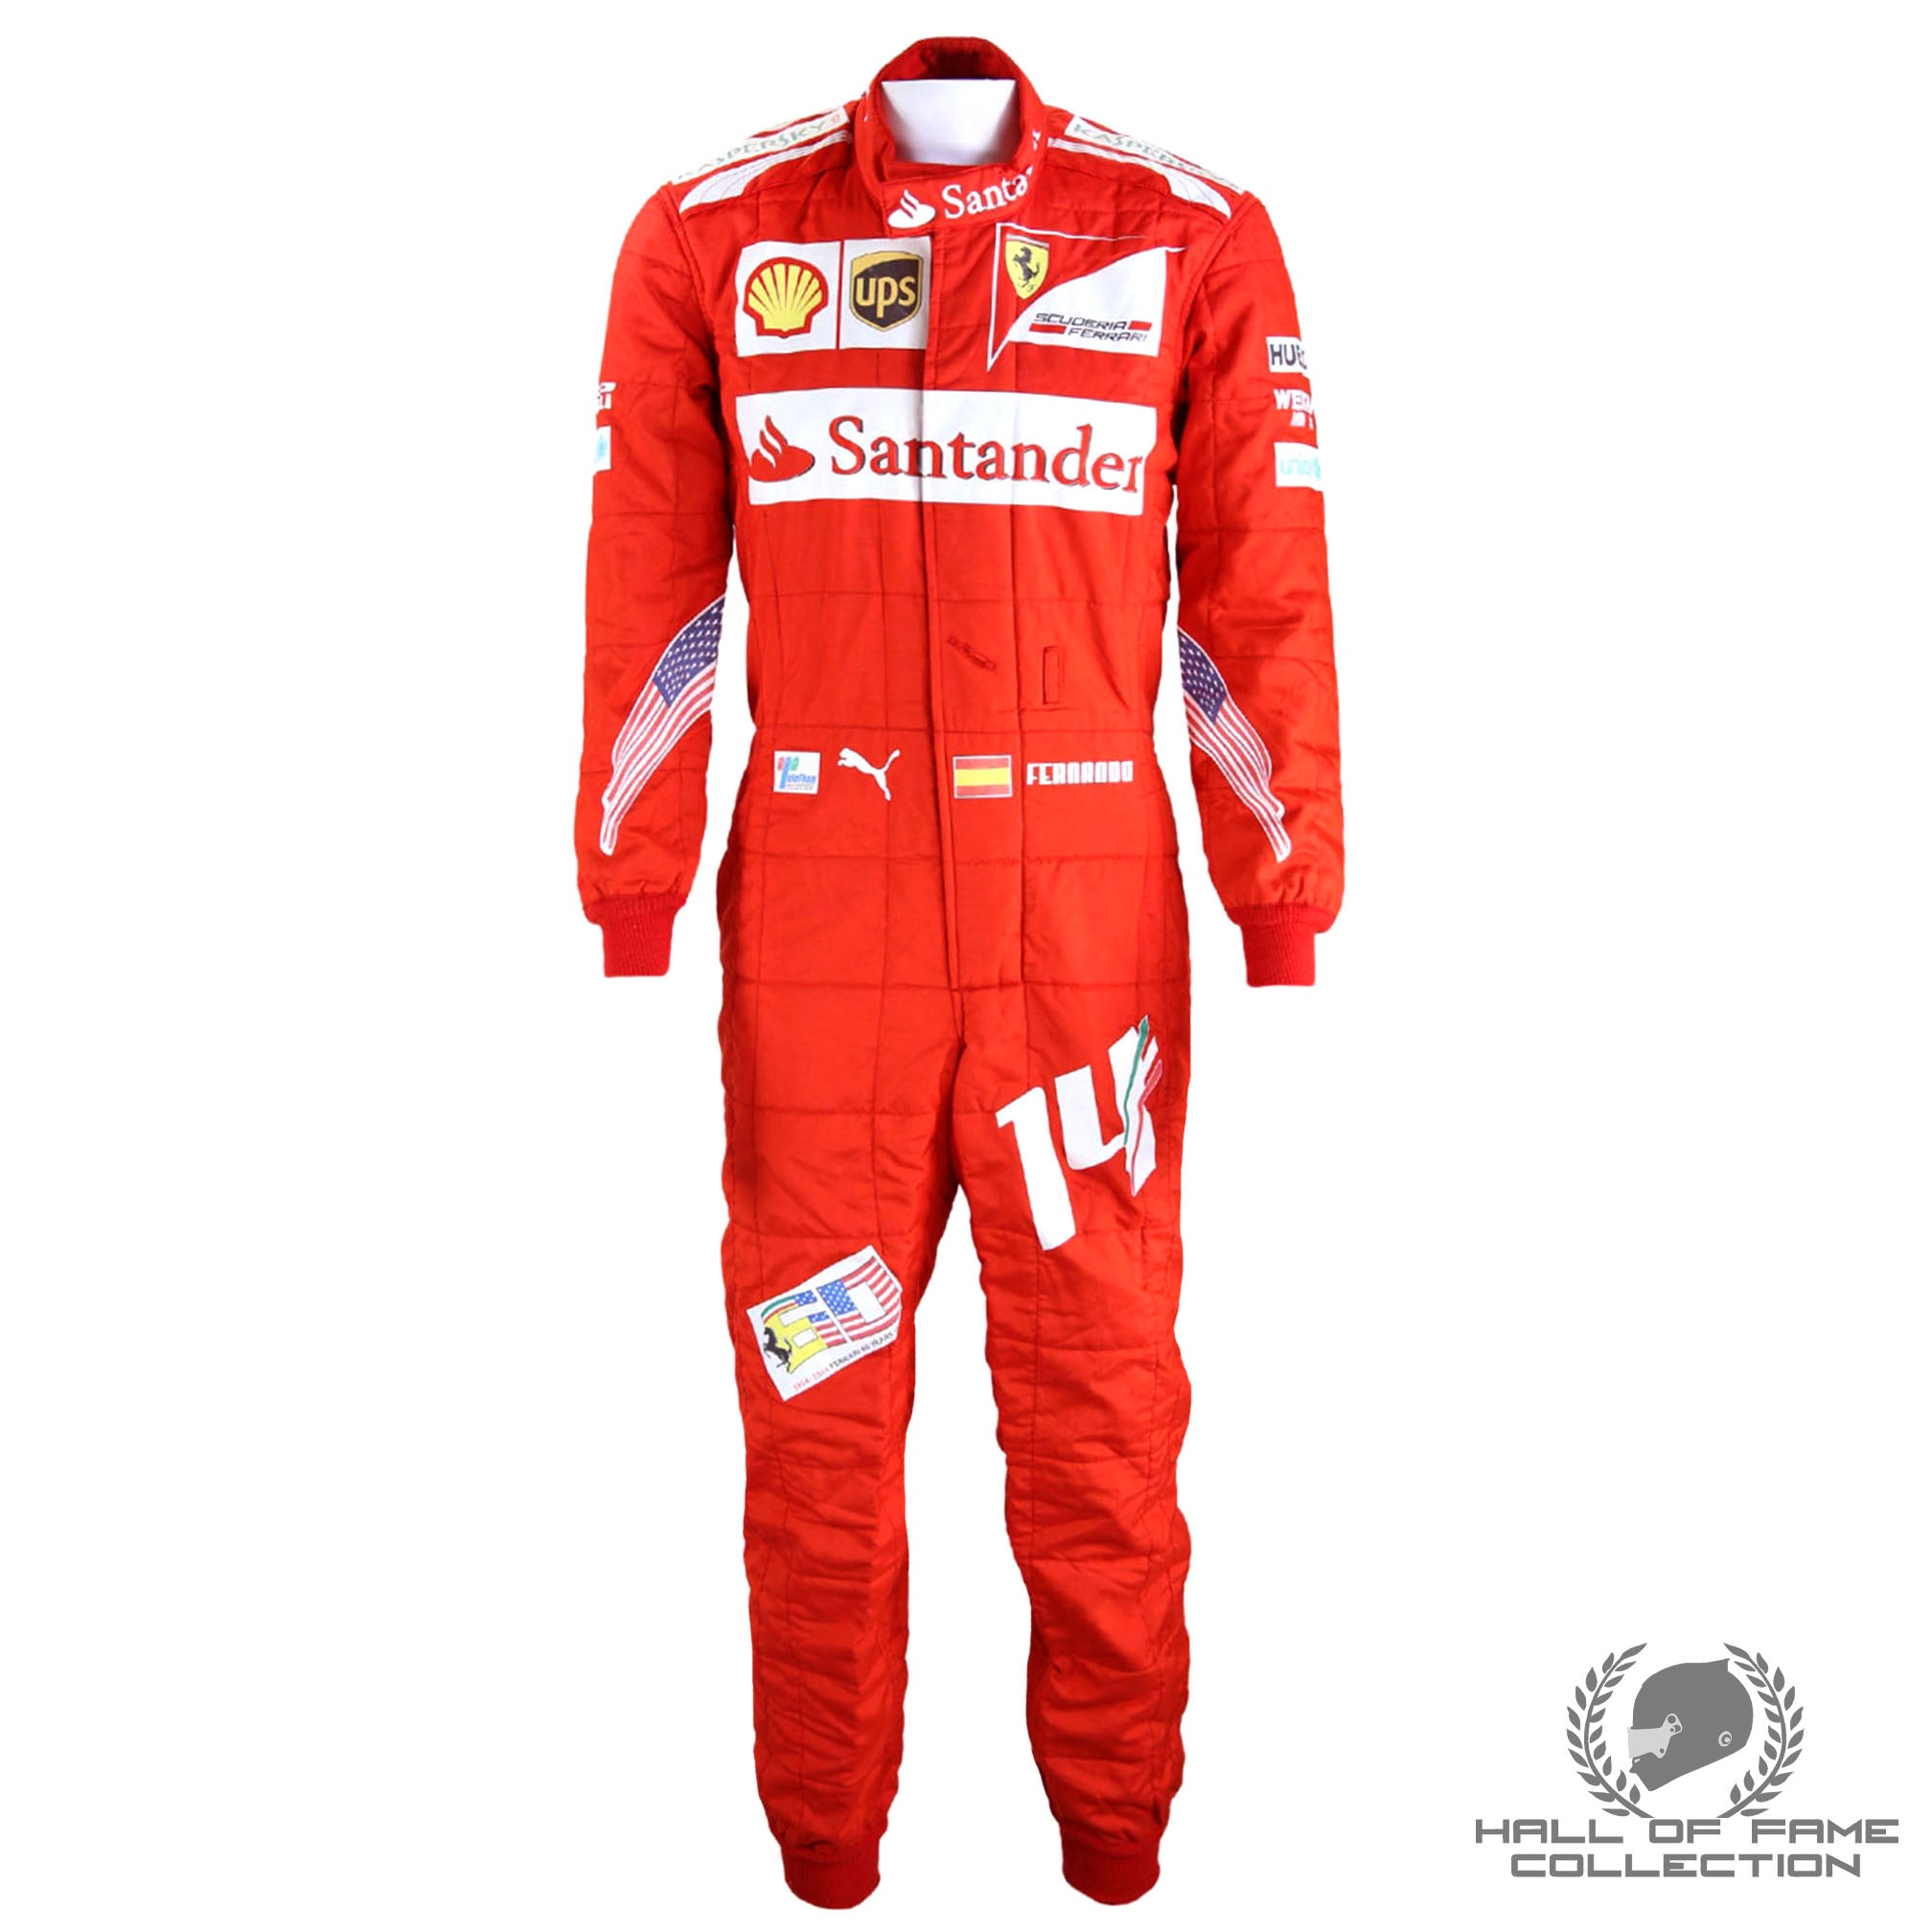 2014 Fernando Alonso United States GP Race Used Scuderia Ferrari F1 Suit